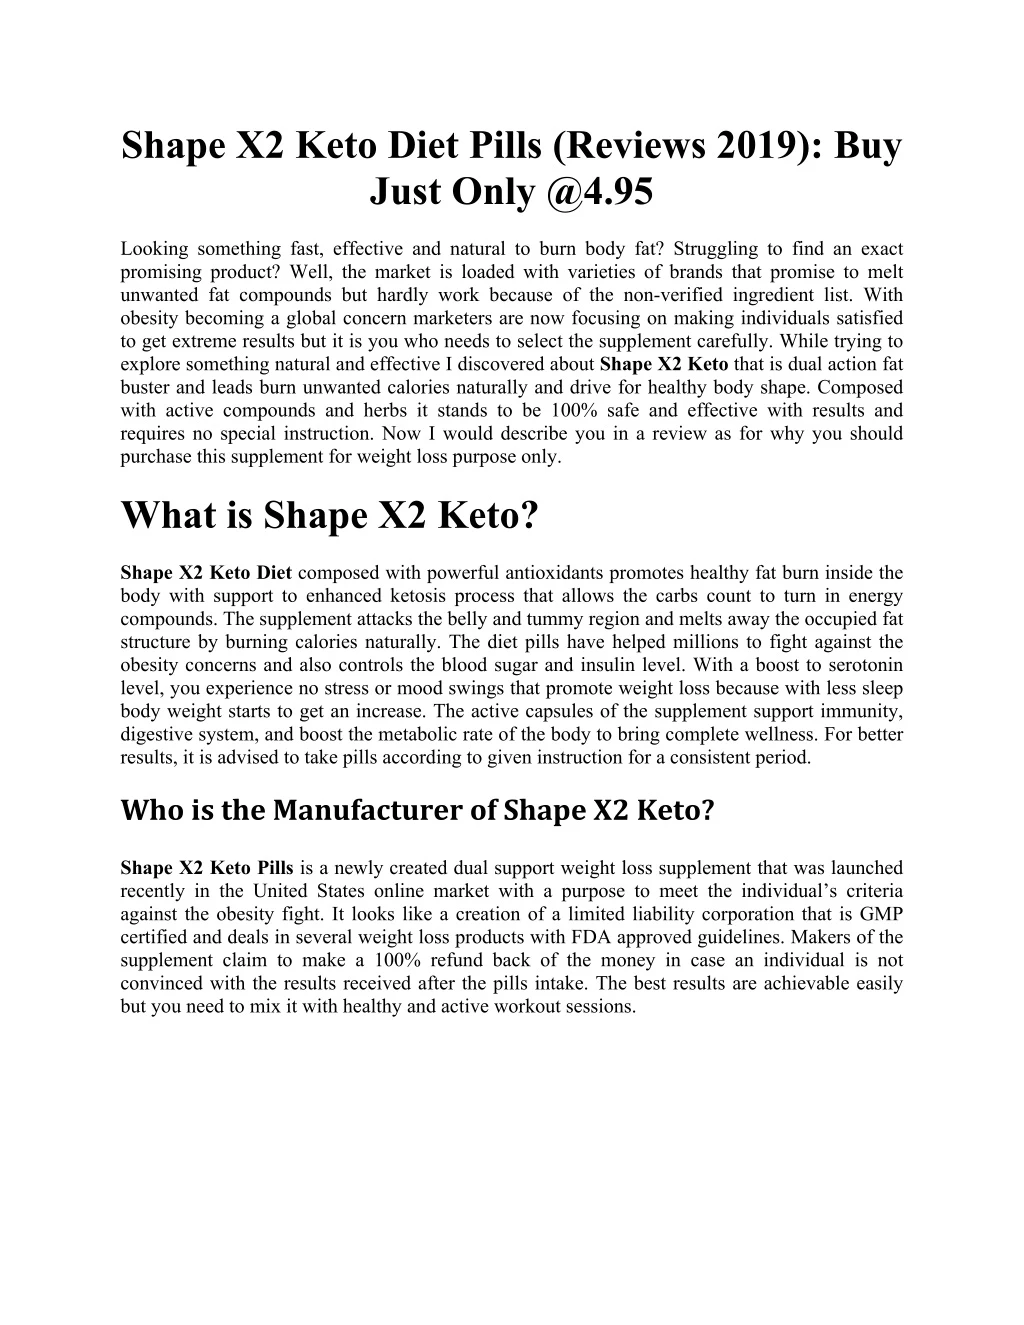 shape x2 keto diet pills reviews 2019 buy just